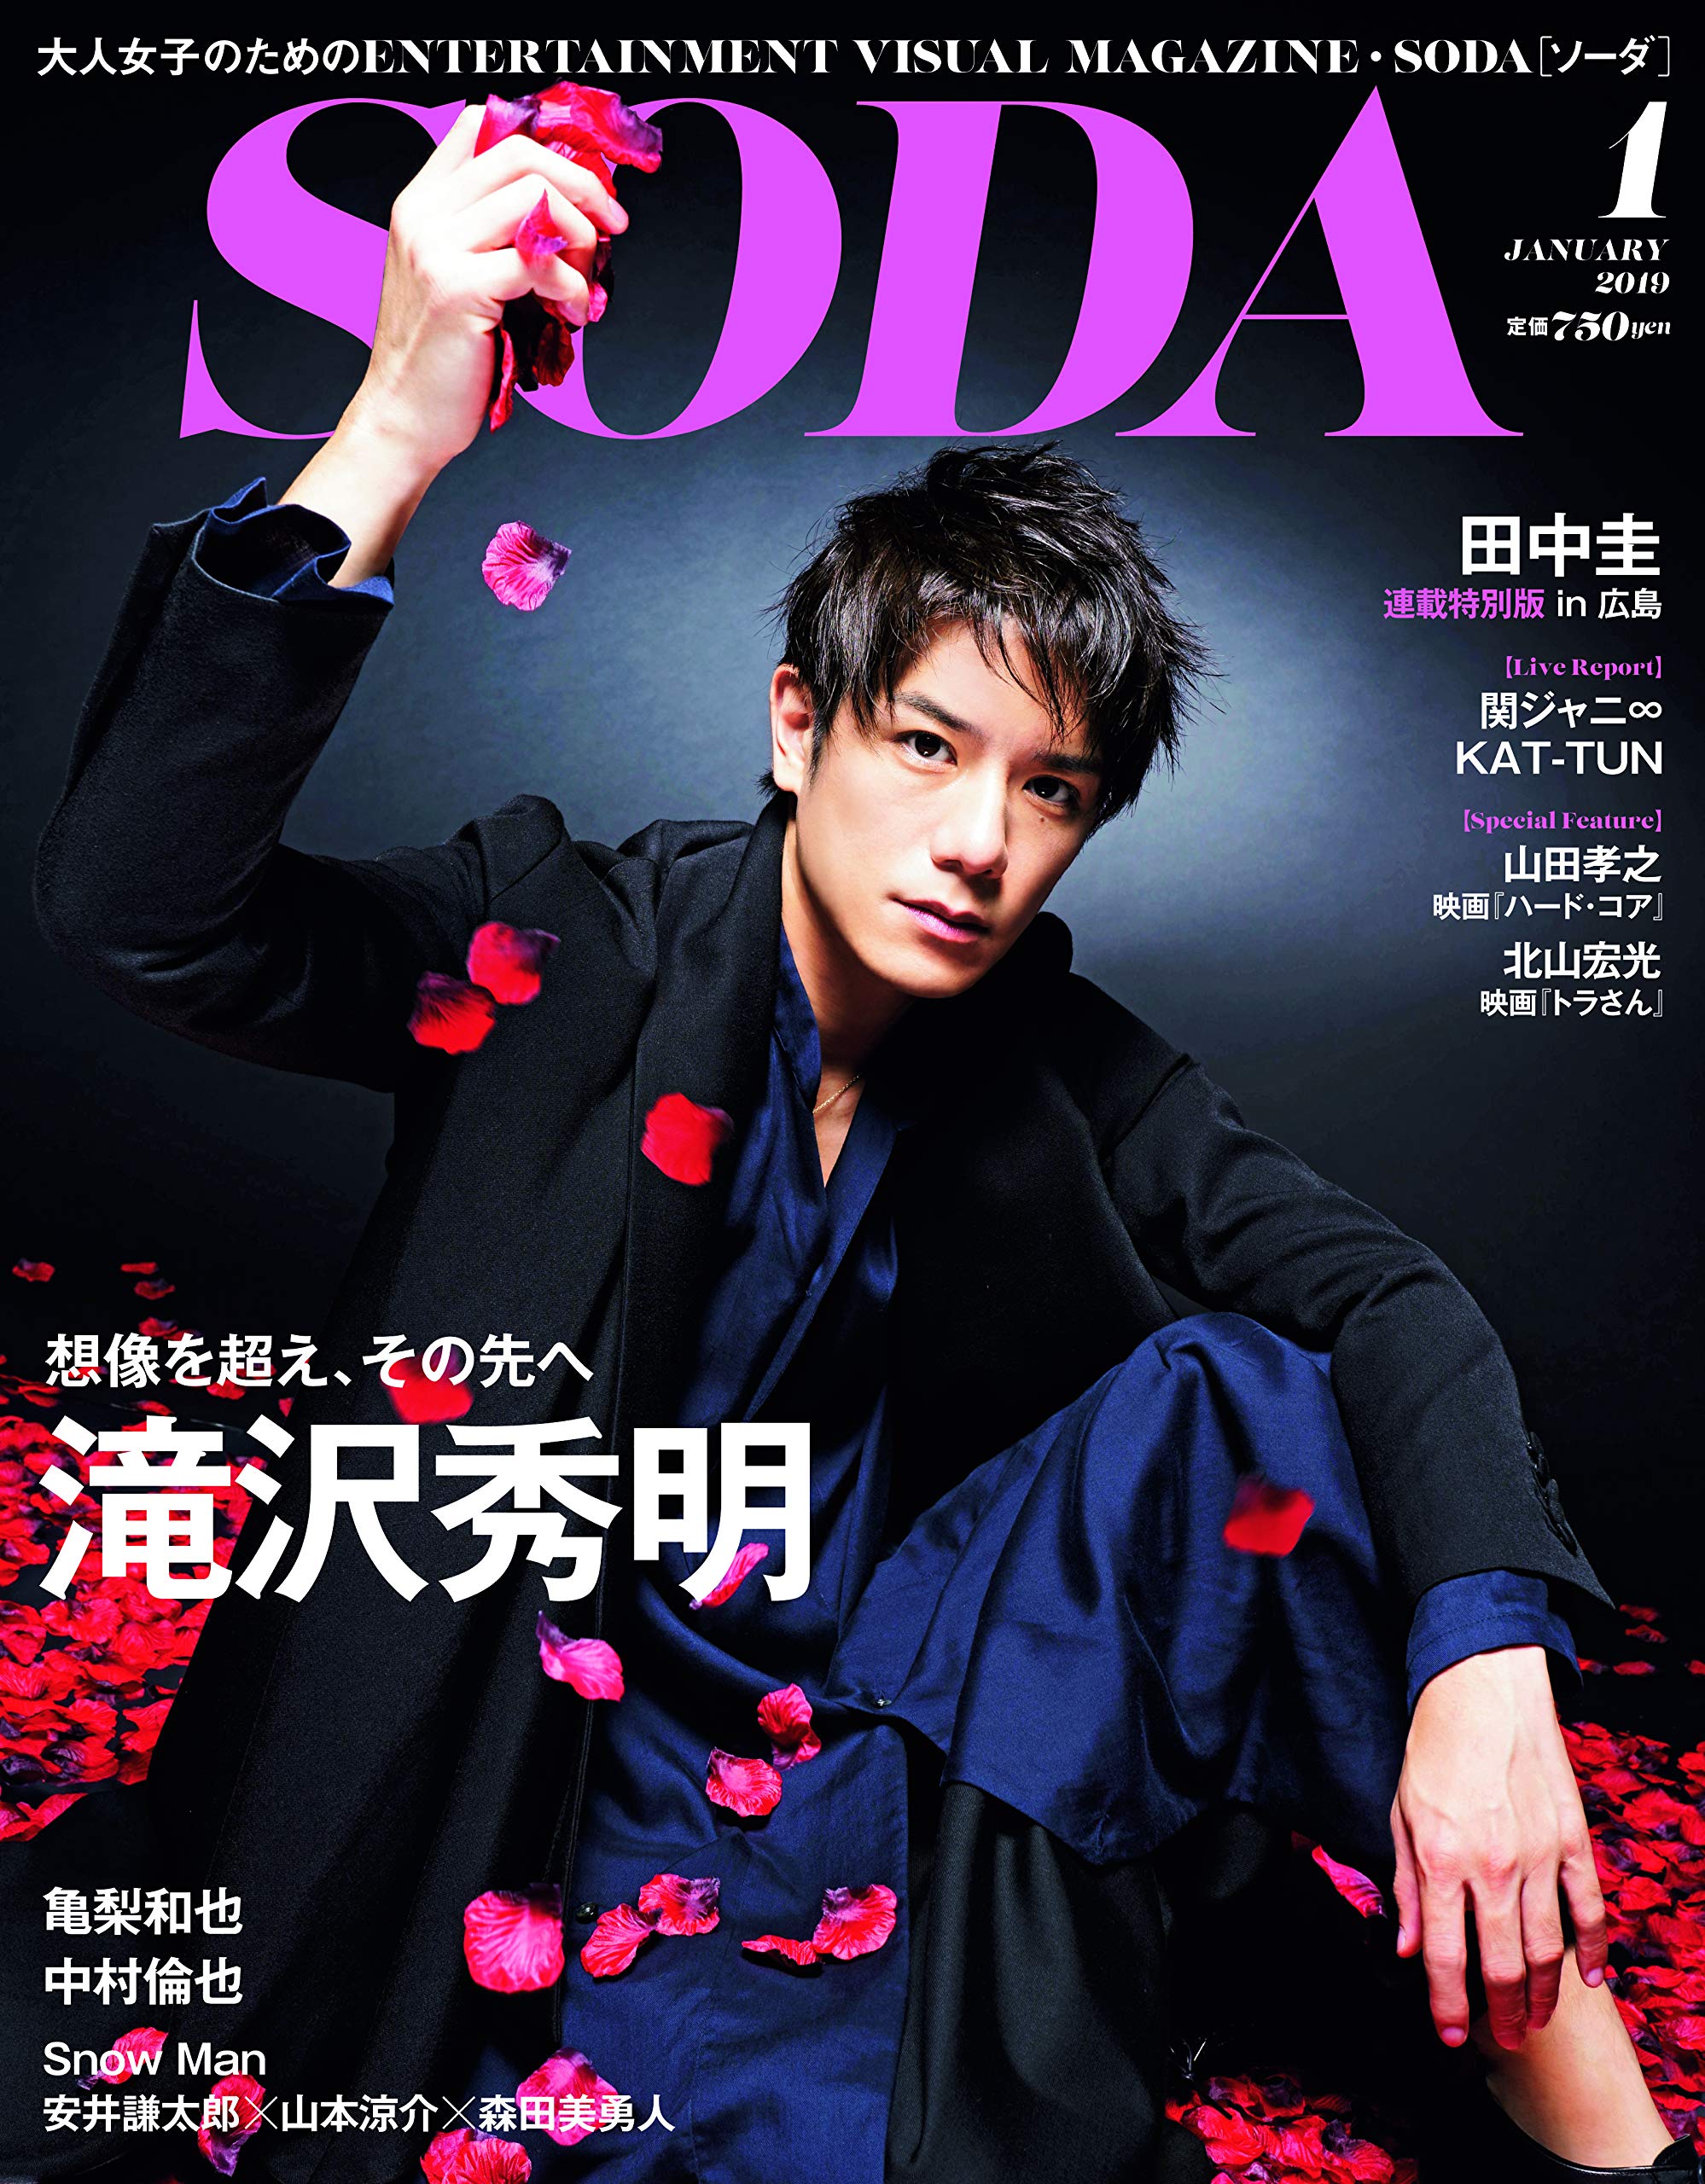 Takizawa Hideaki to grace cover of SODA Jan 2019!